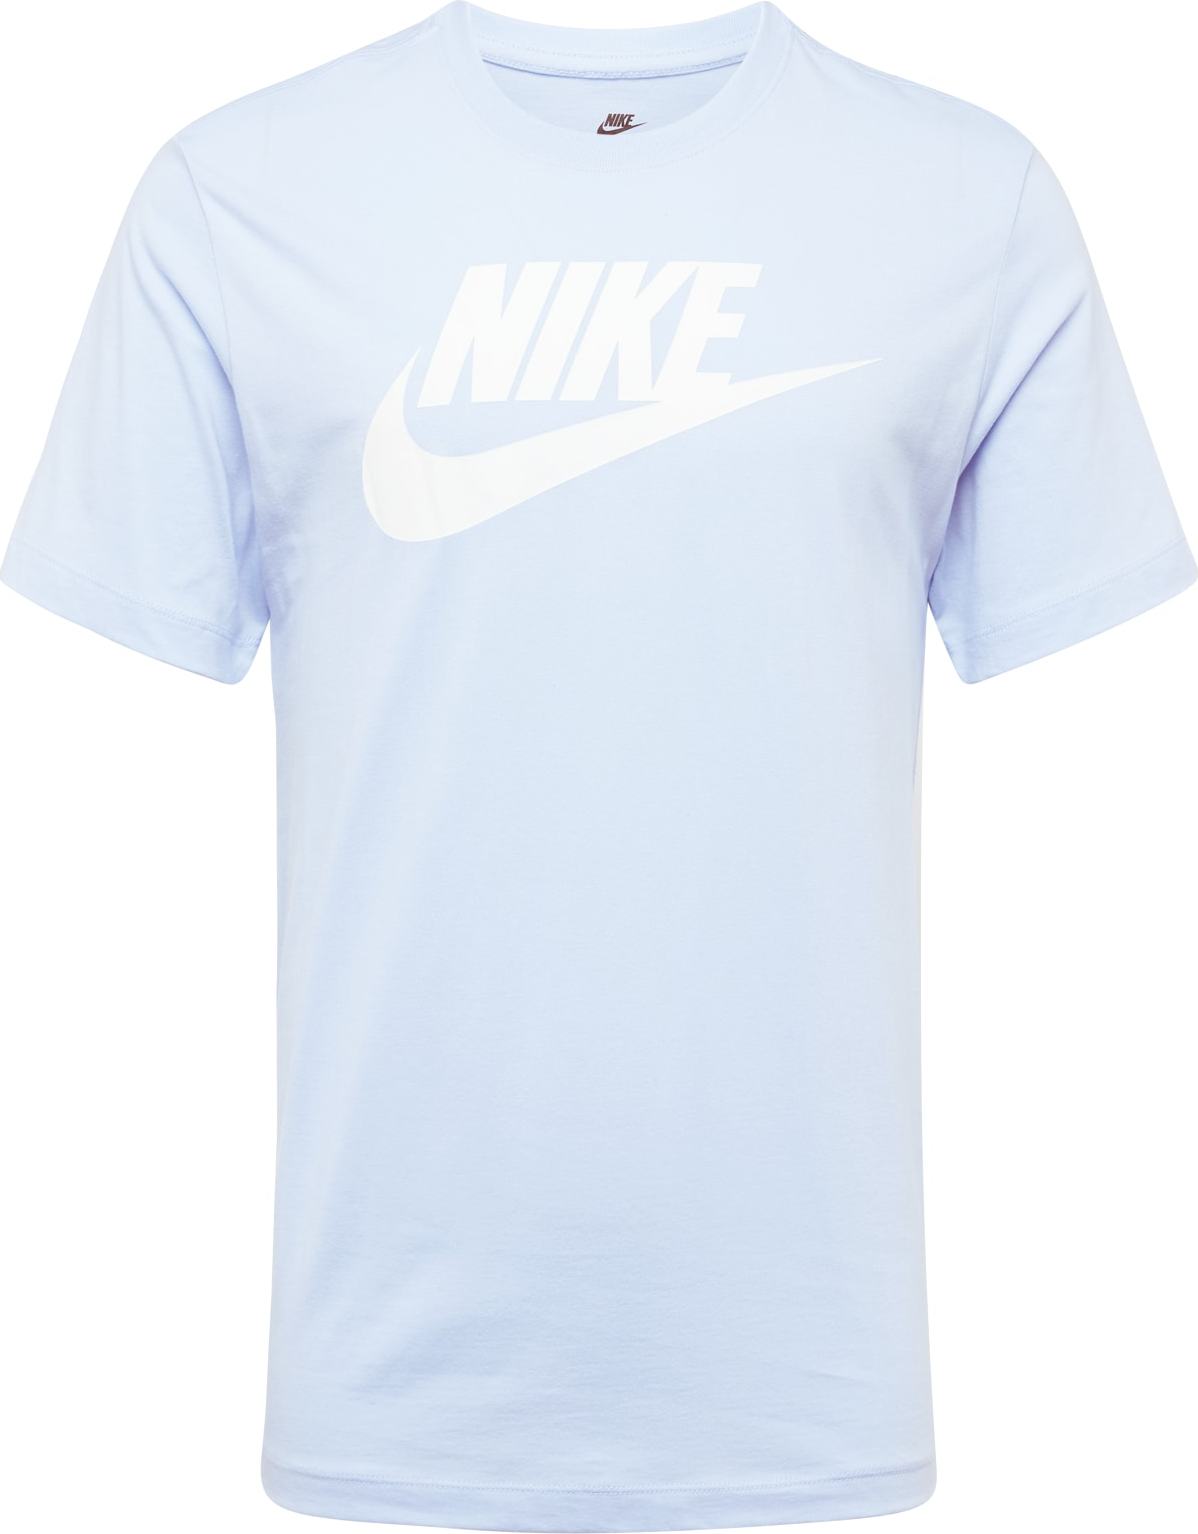 Tričko Nike Sportswear světlemodrá / bílá